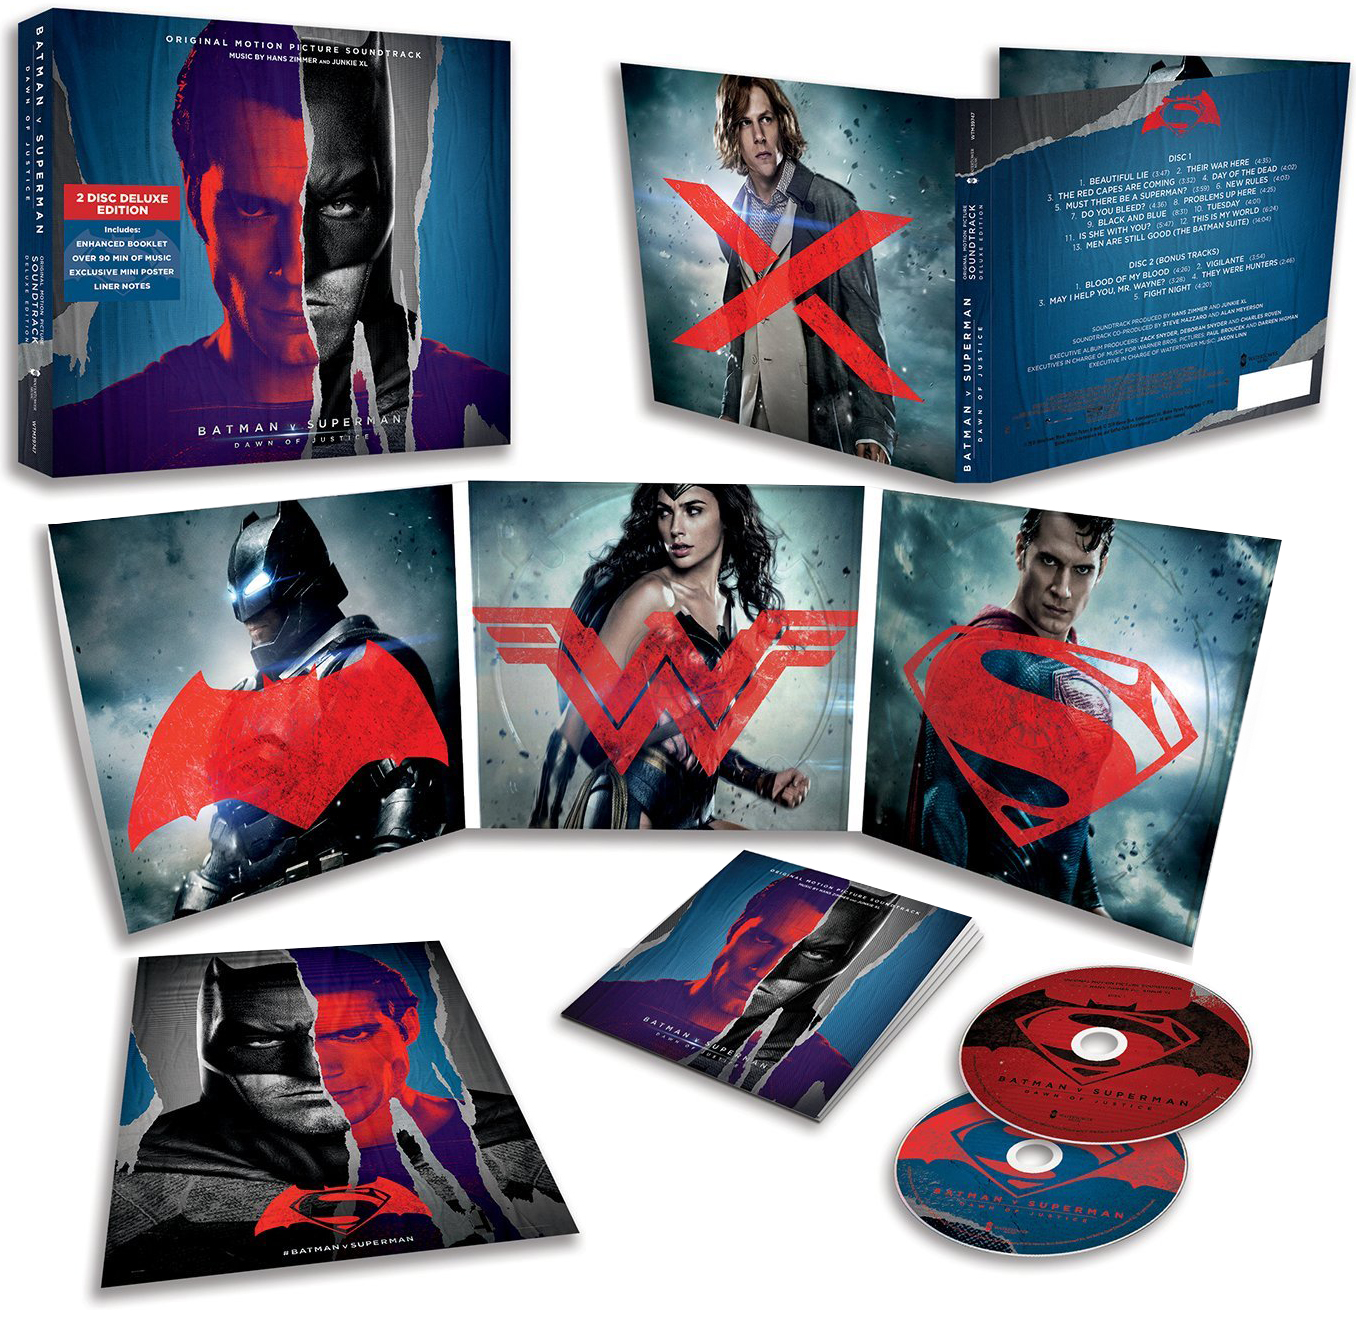 Batman v Superman: Dawn Of Justice- Soundtrack details -  